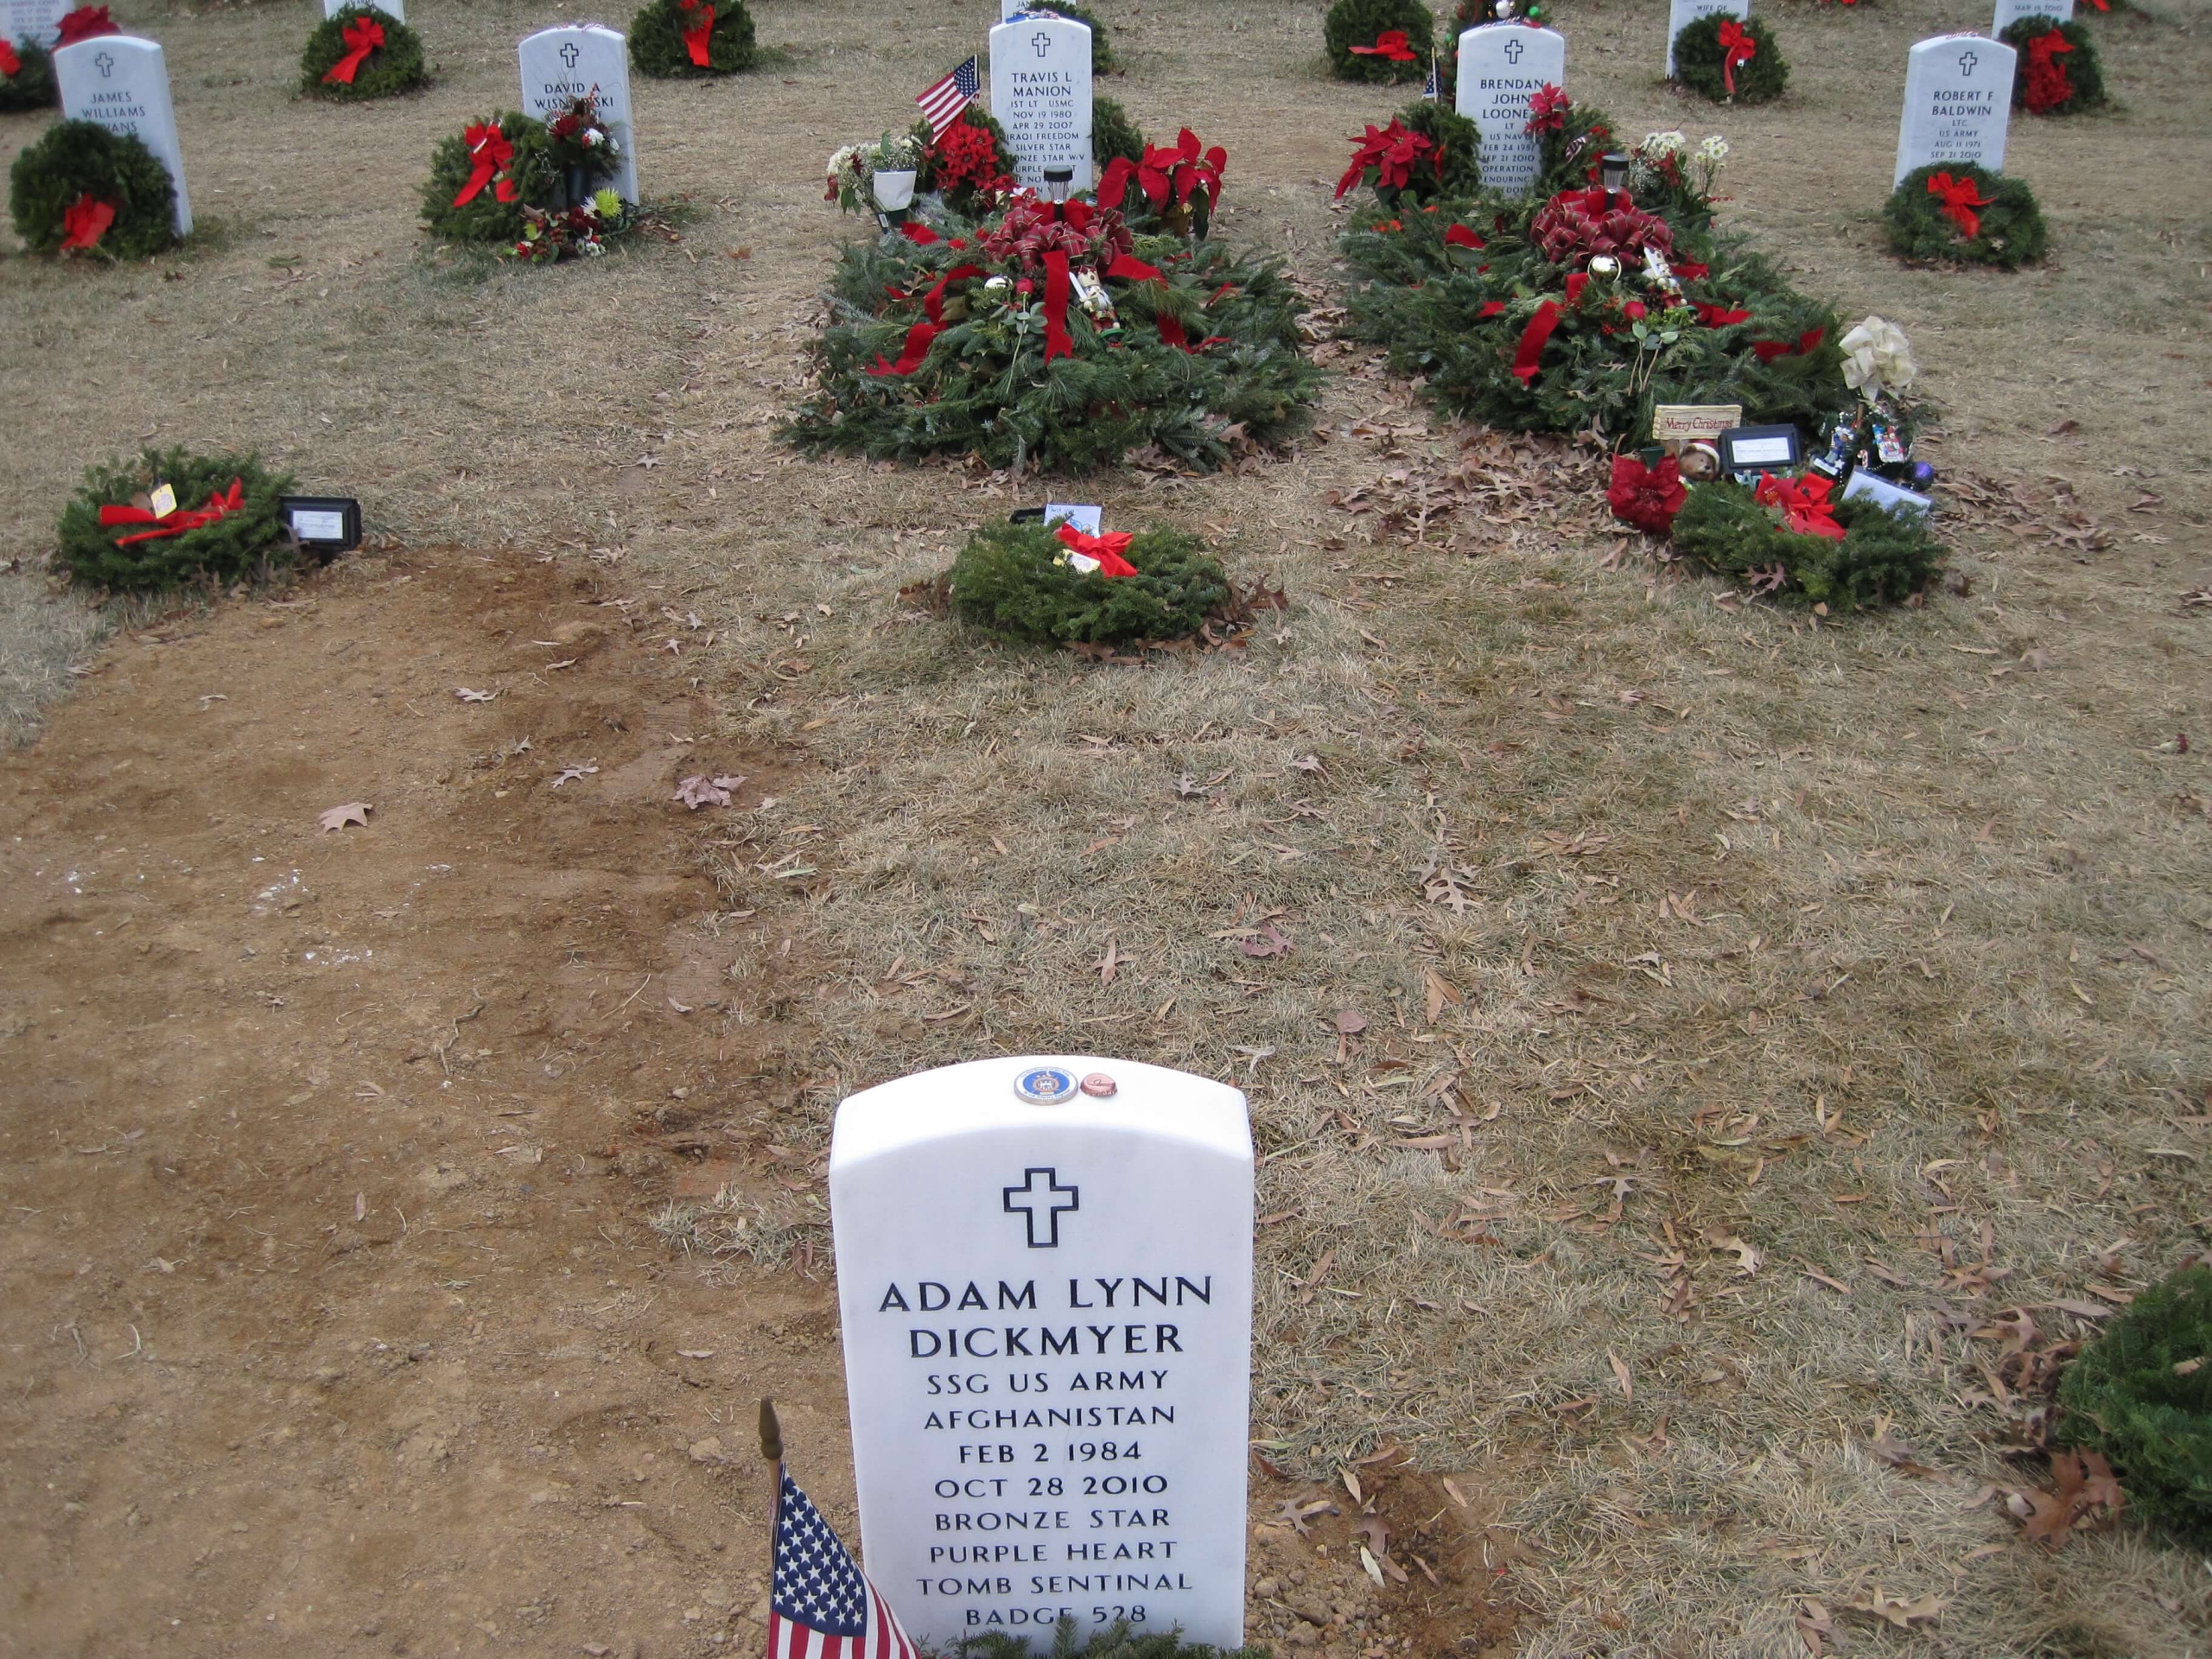 aldickmyer-gravesite-photo-by-eileen-horan-december-2010-003